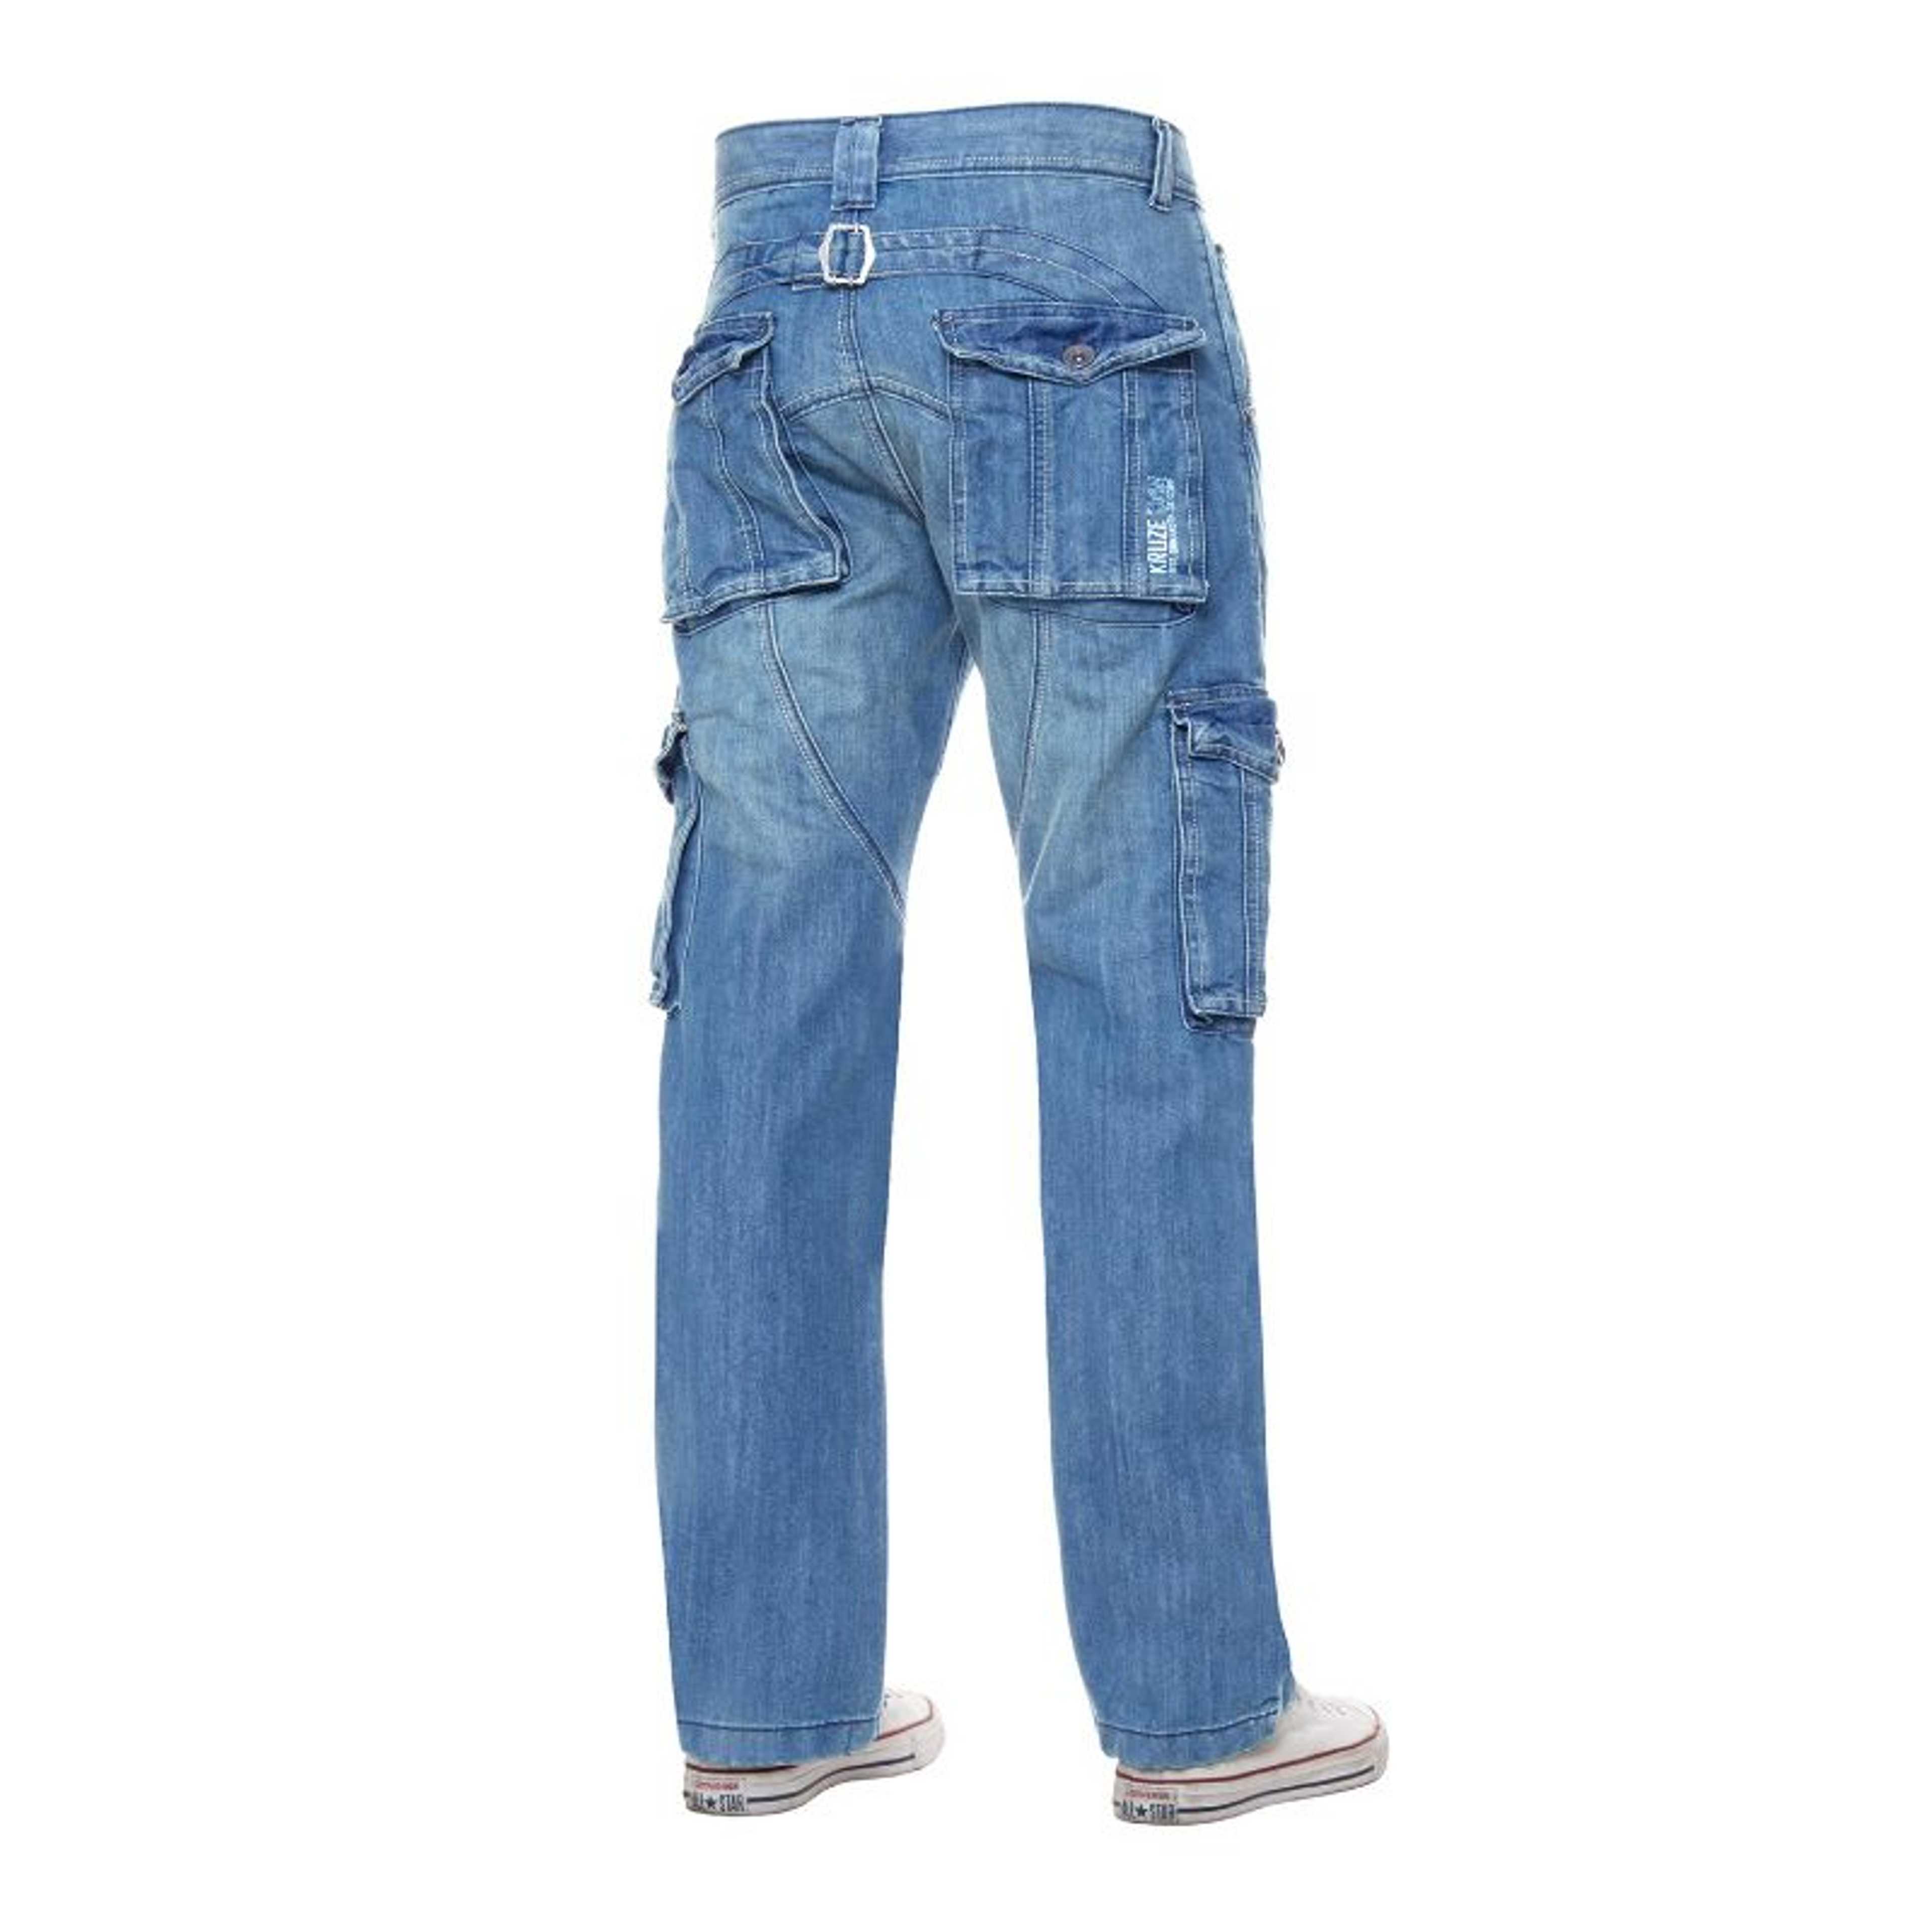 Rubahas Men’s Multi Pocket Denim Jeans Pant in Sky Blue color